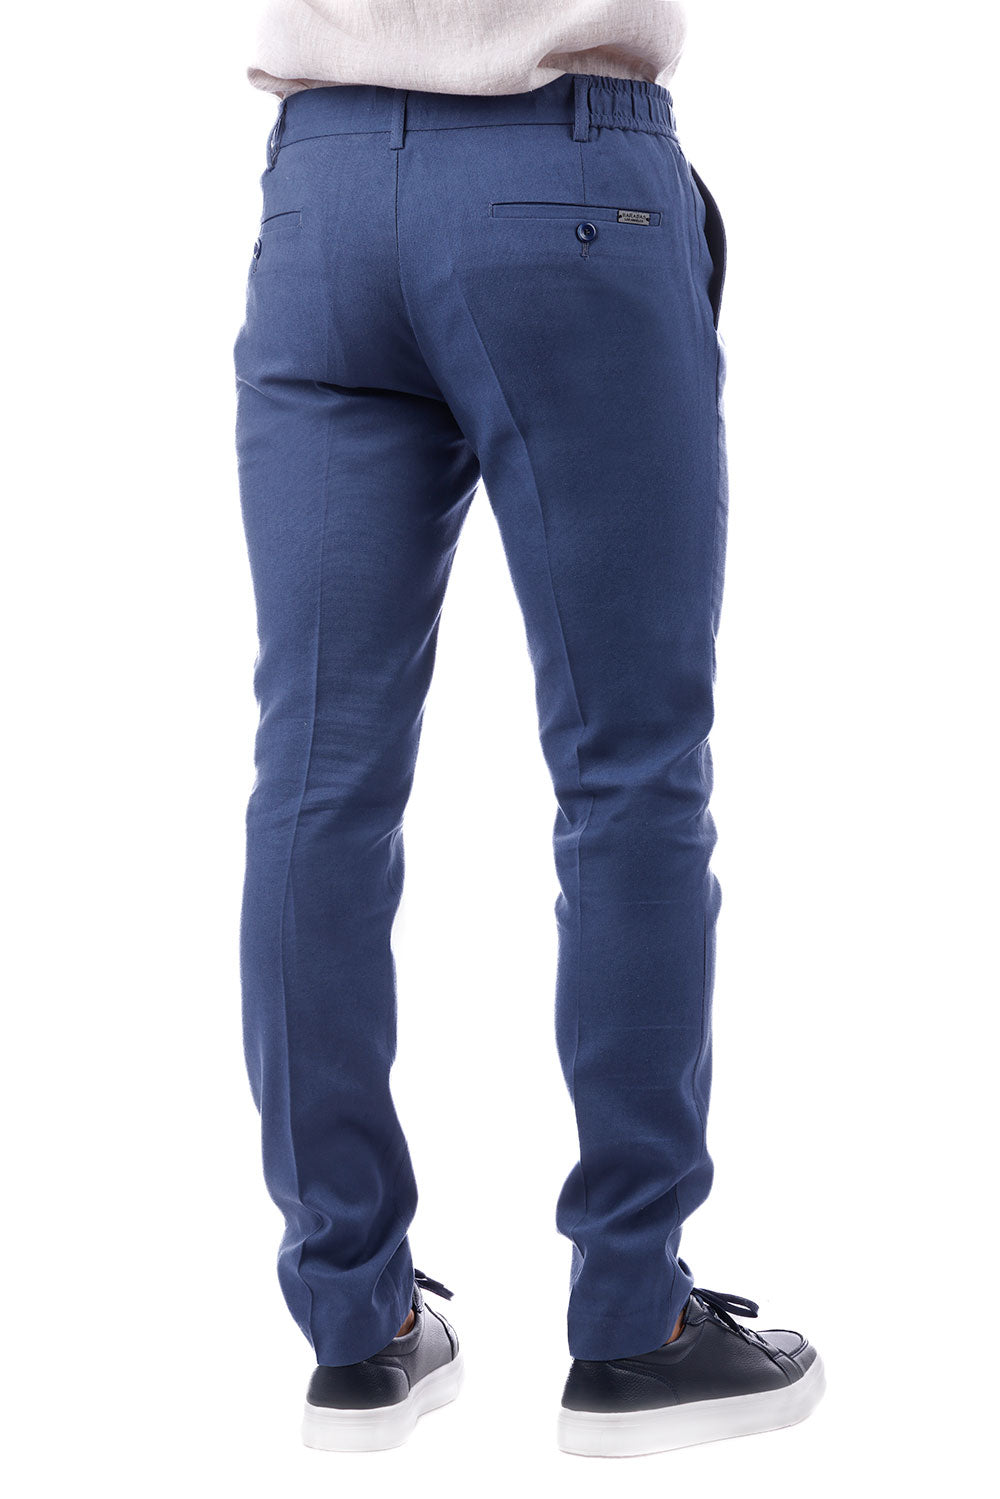 Barabas Men's Adjustable Waistband Drawstring Linen Pants 4CP30 Blue